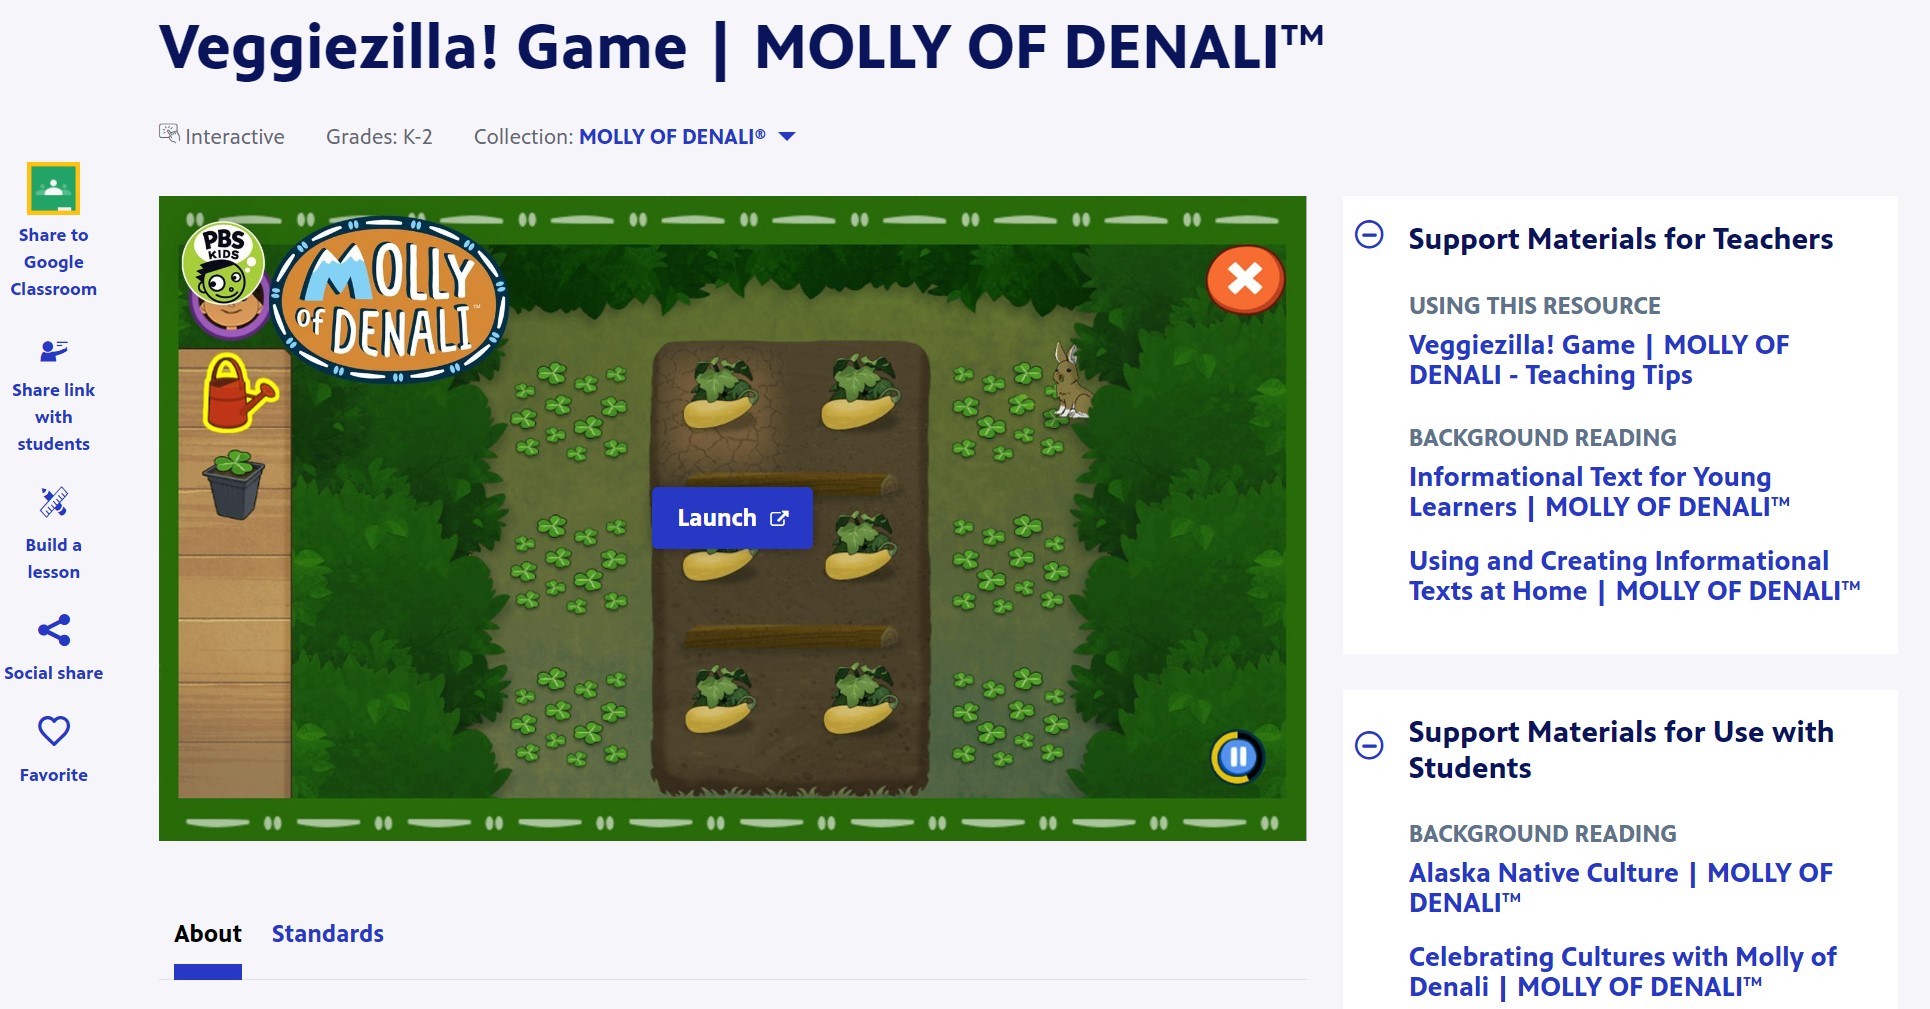 Veggiezilla! Game | Molly of Denali